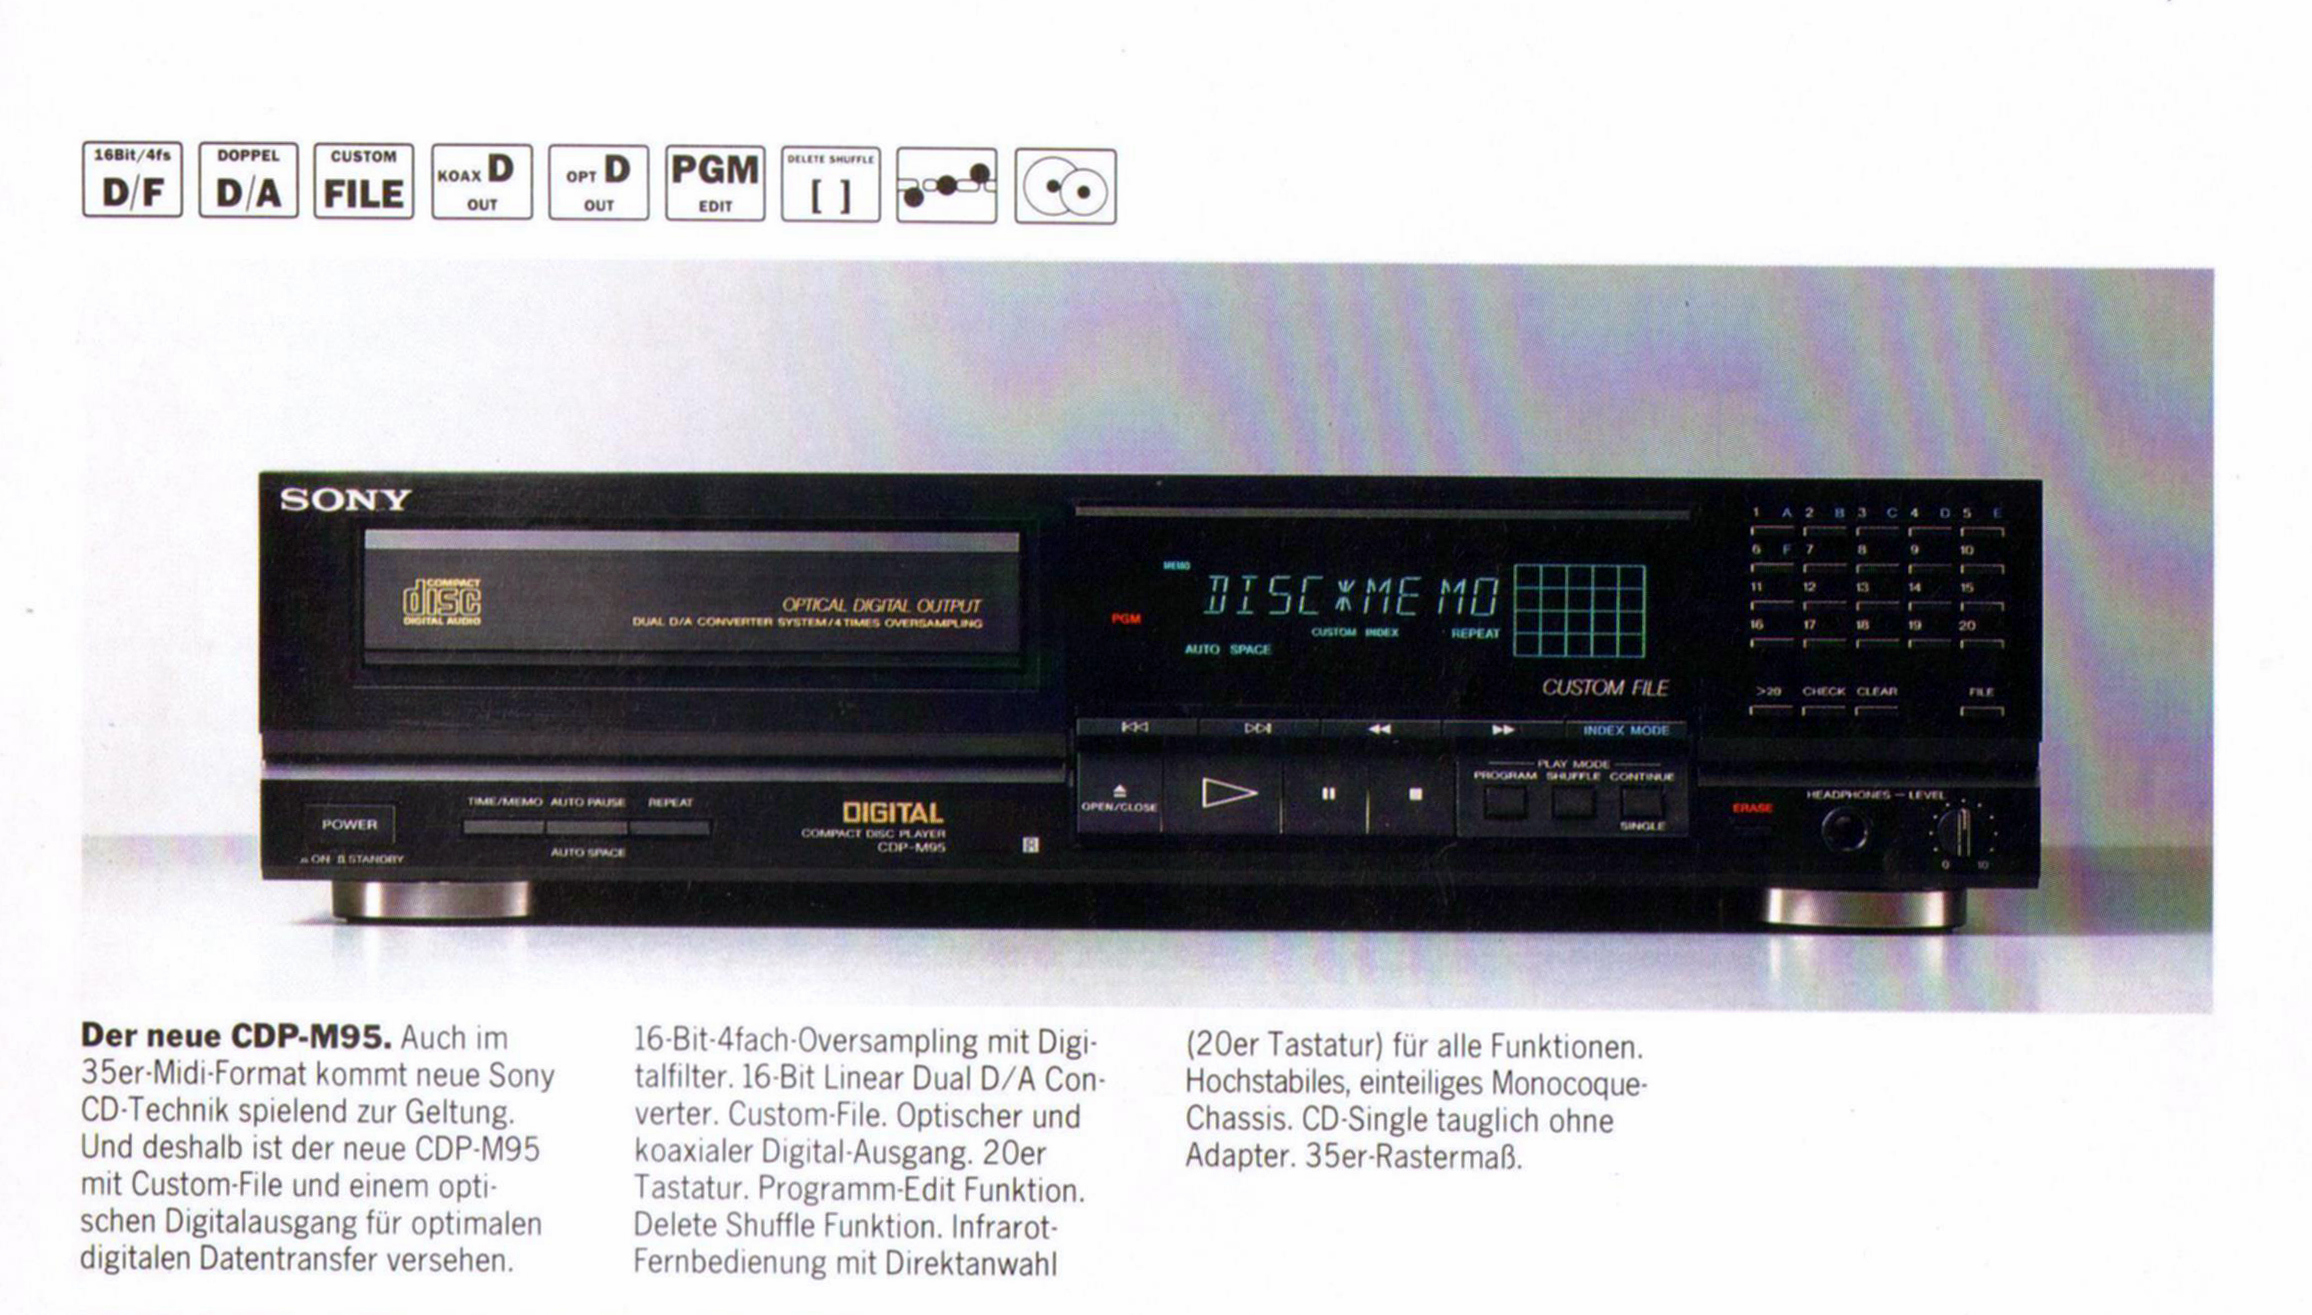 Sony CDP-M 95-Prospekt-1988.jpg